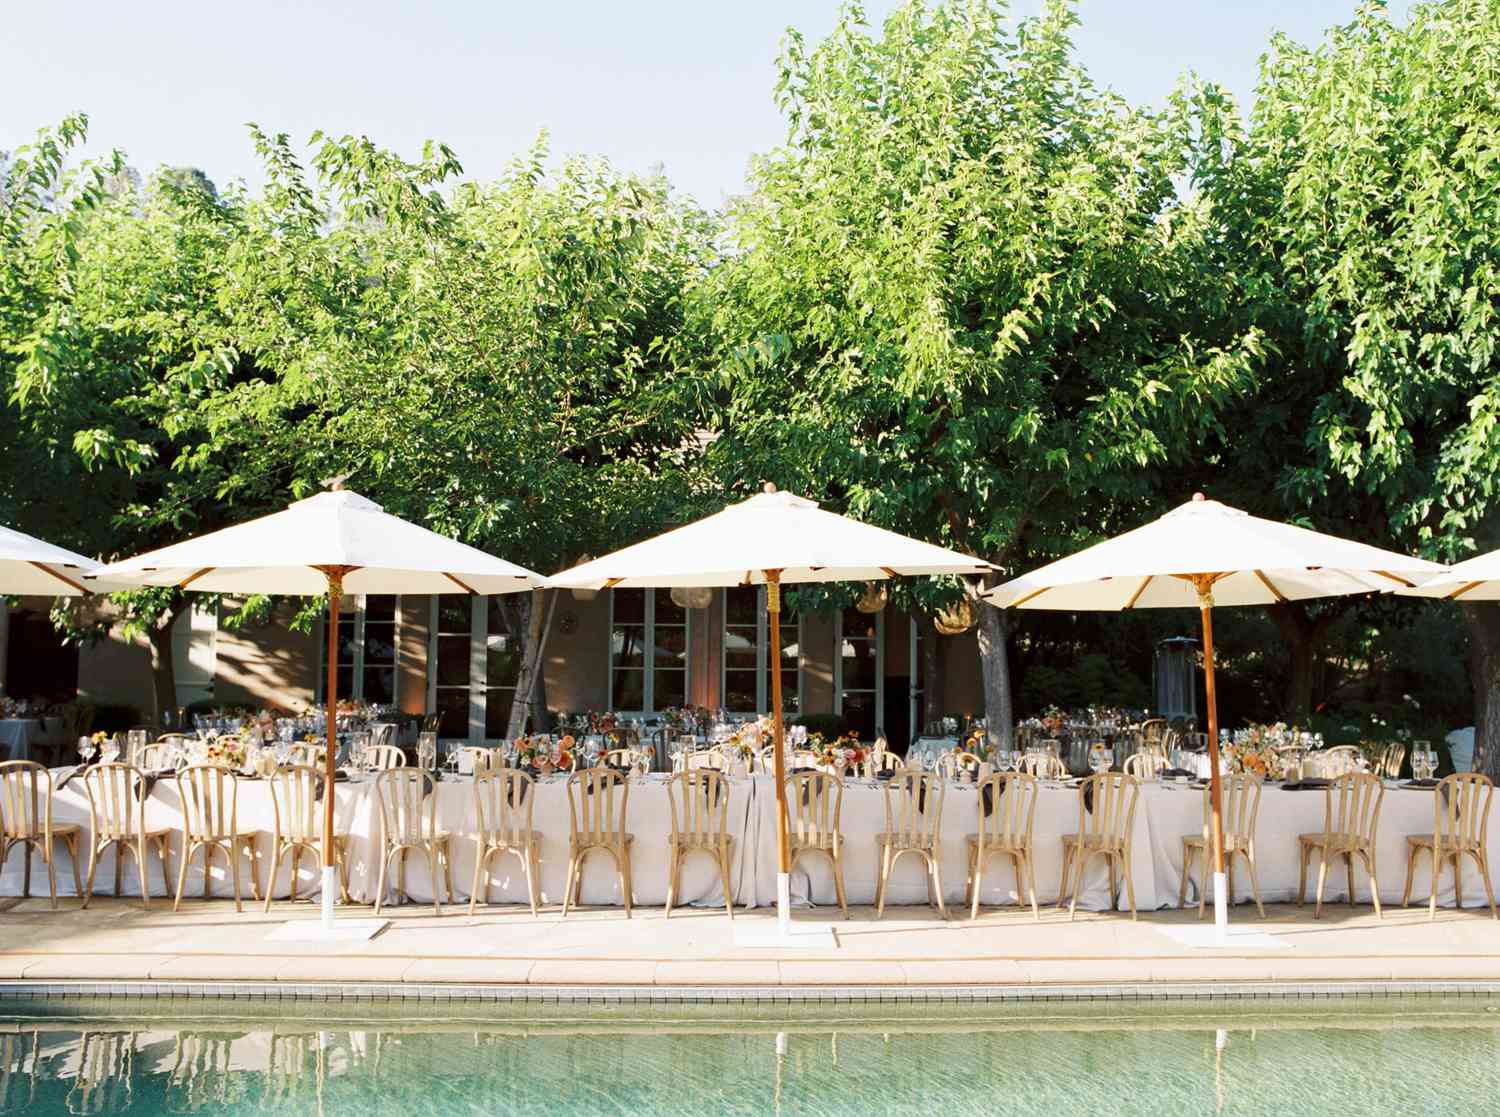 reception tables set up under umbrellas by pool